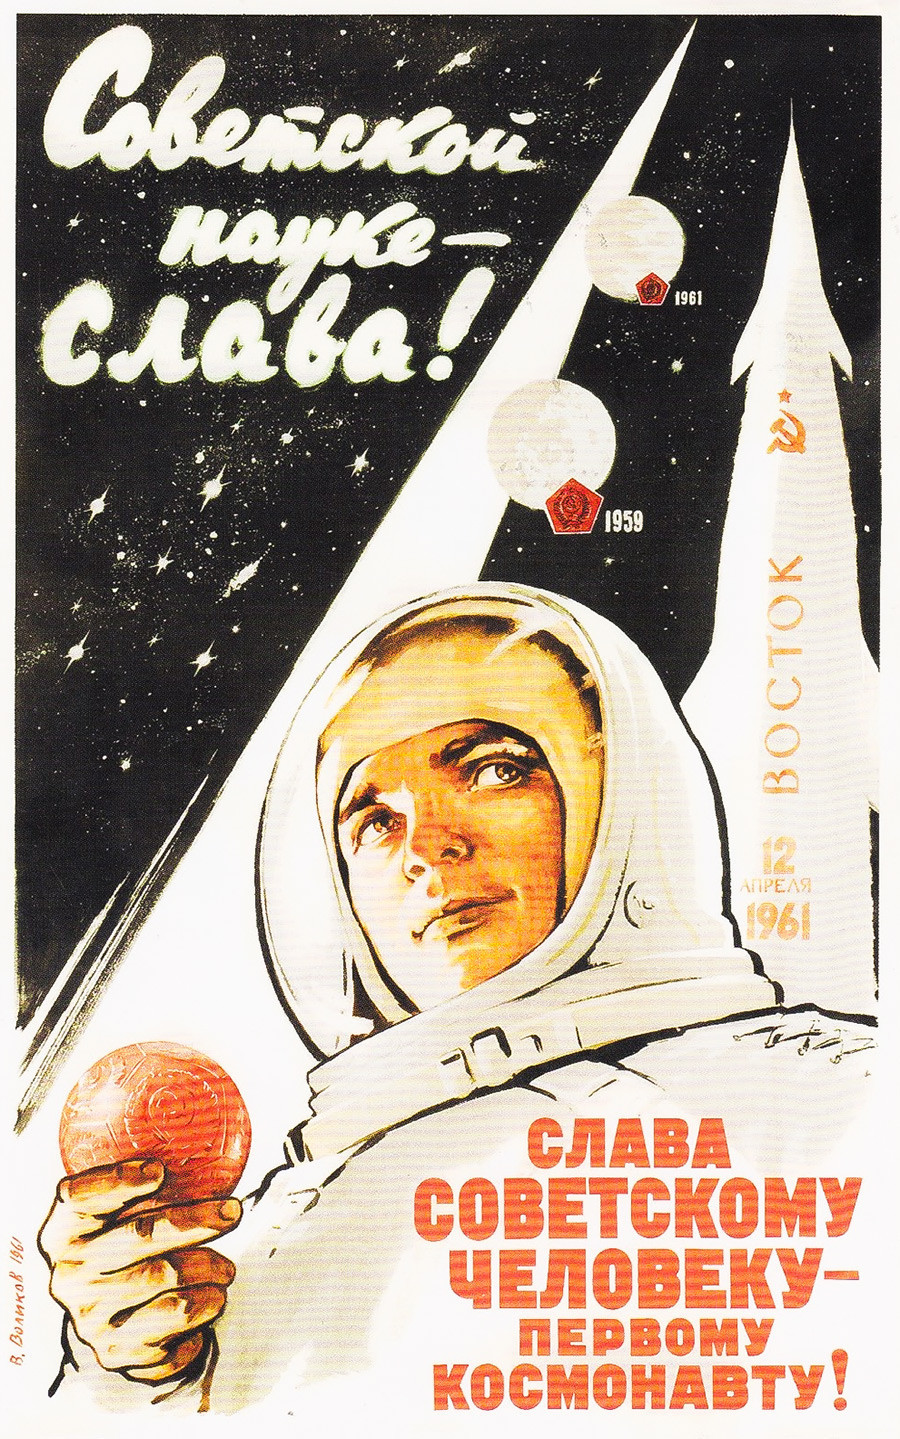 »Slava prvemu sovjetskemu kozmonavtu! Slava sovjetski znanosti!«